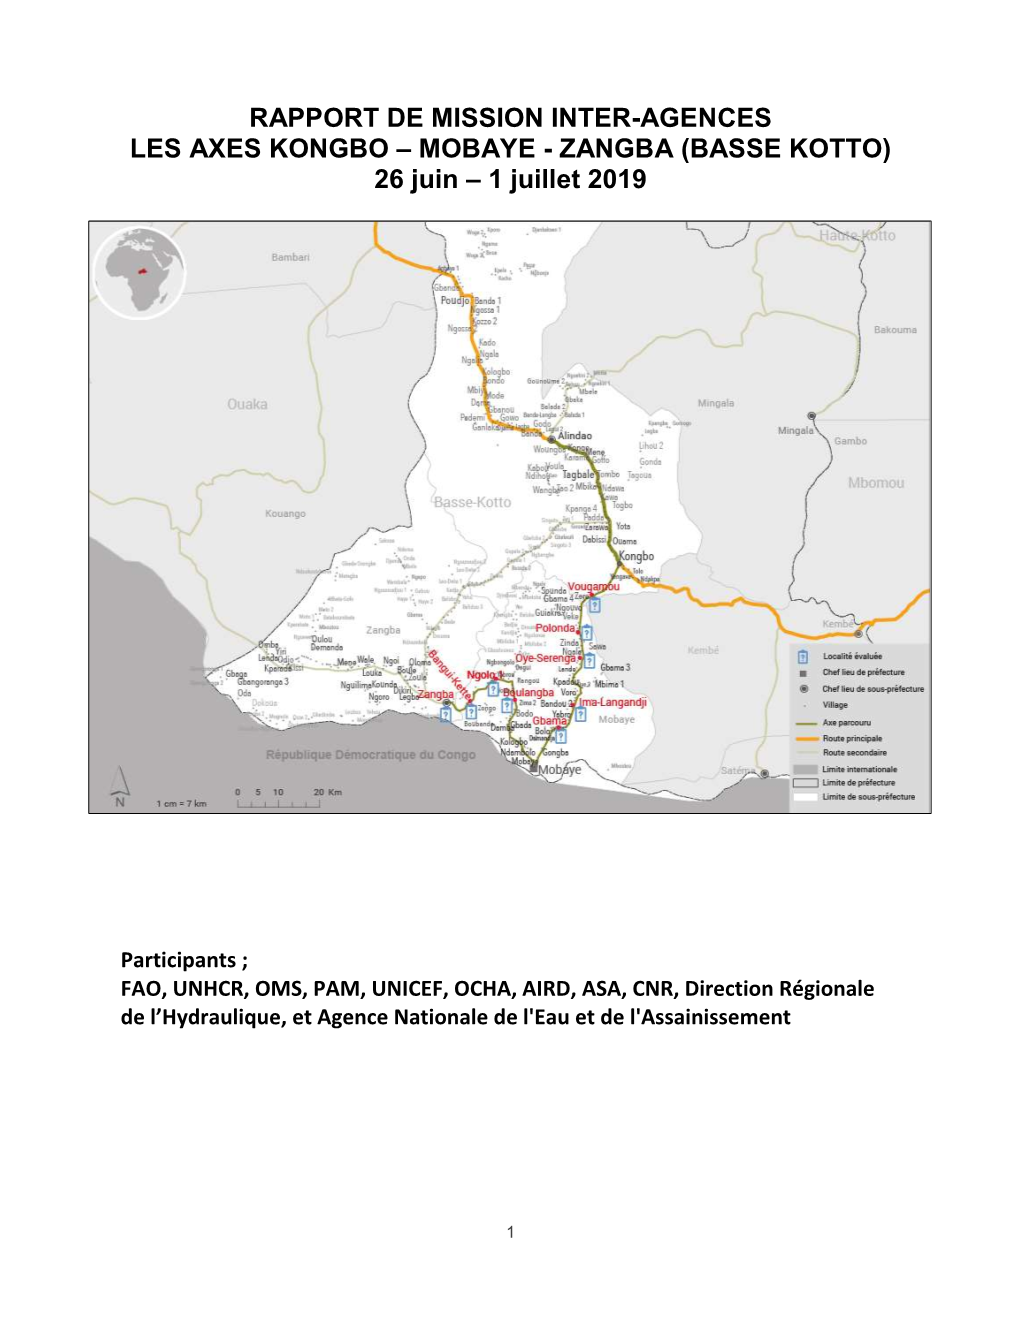 MOBAYE - ZANGBA (BASSE KOTTO) 26 Juin – 1 Juillet 2019